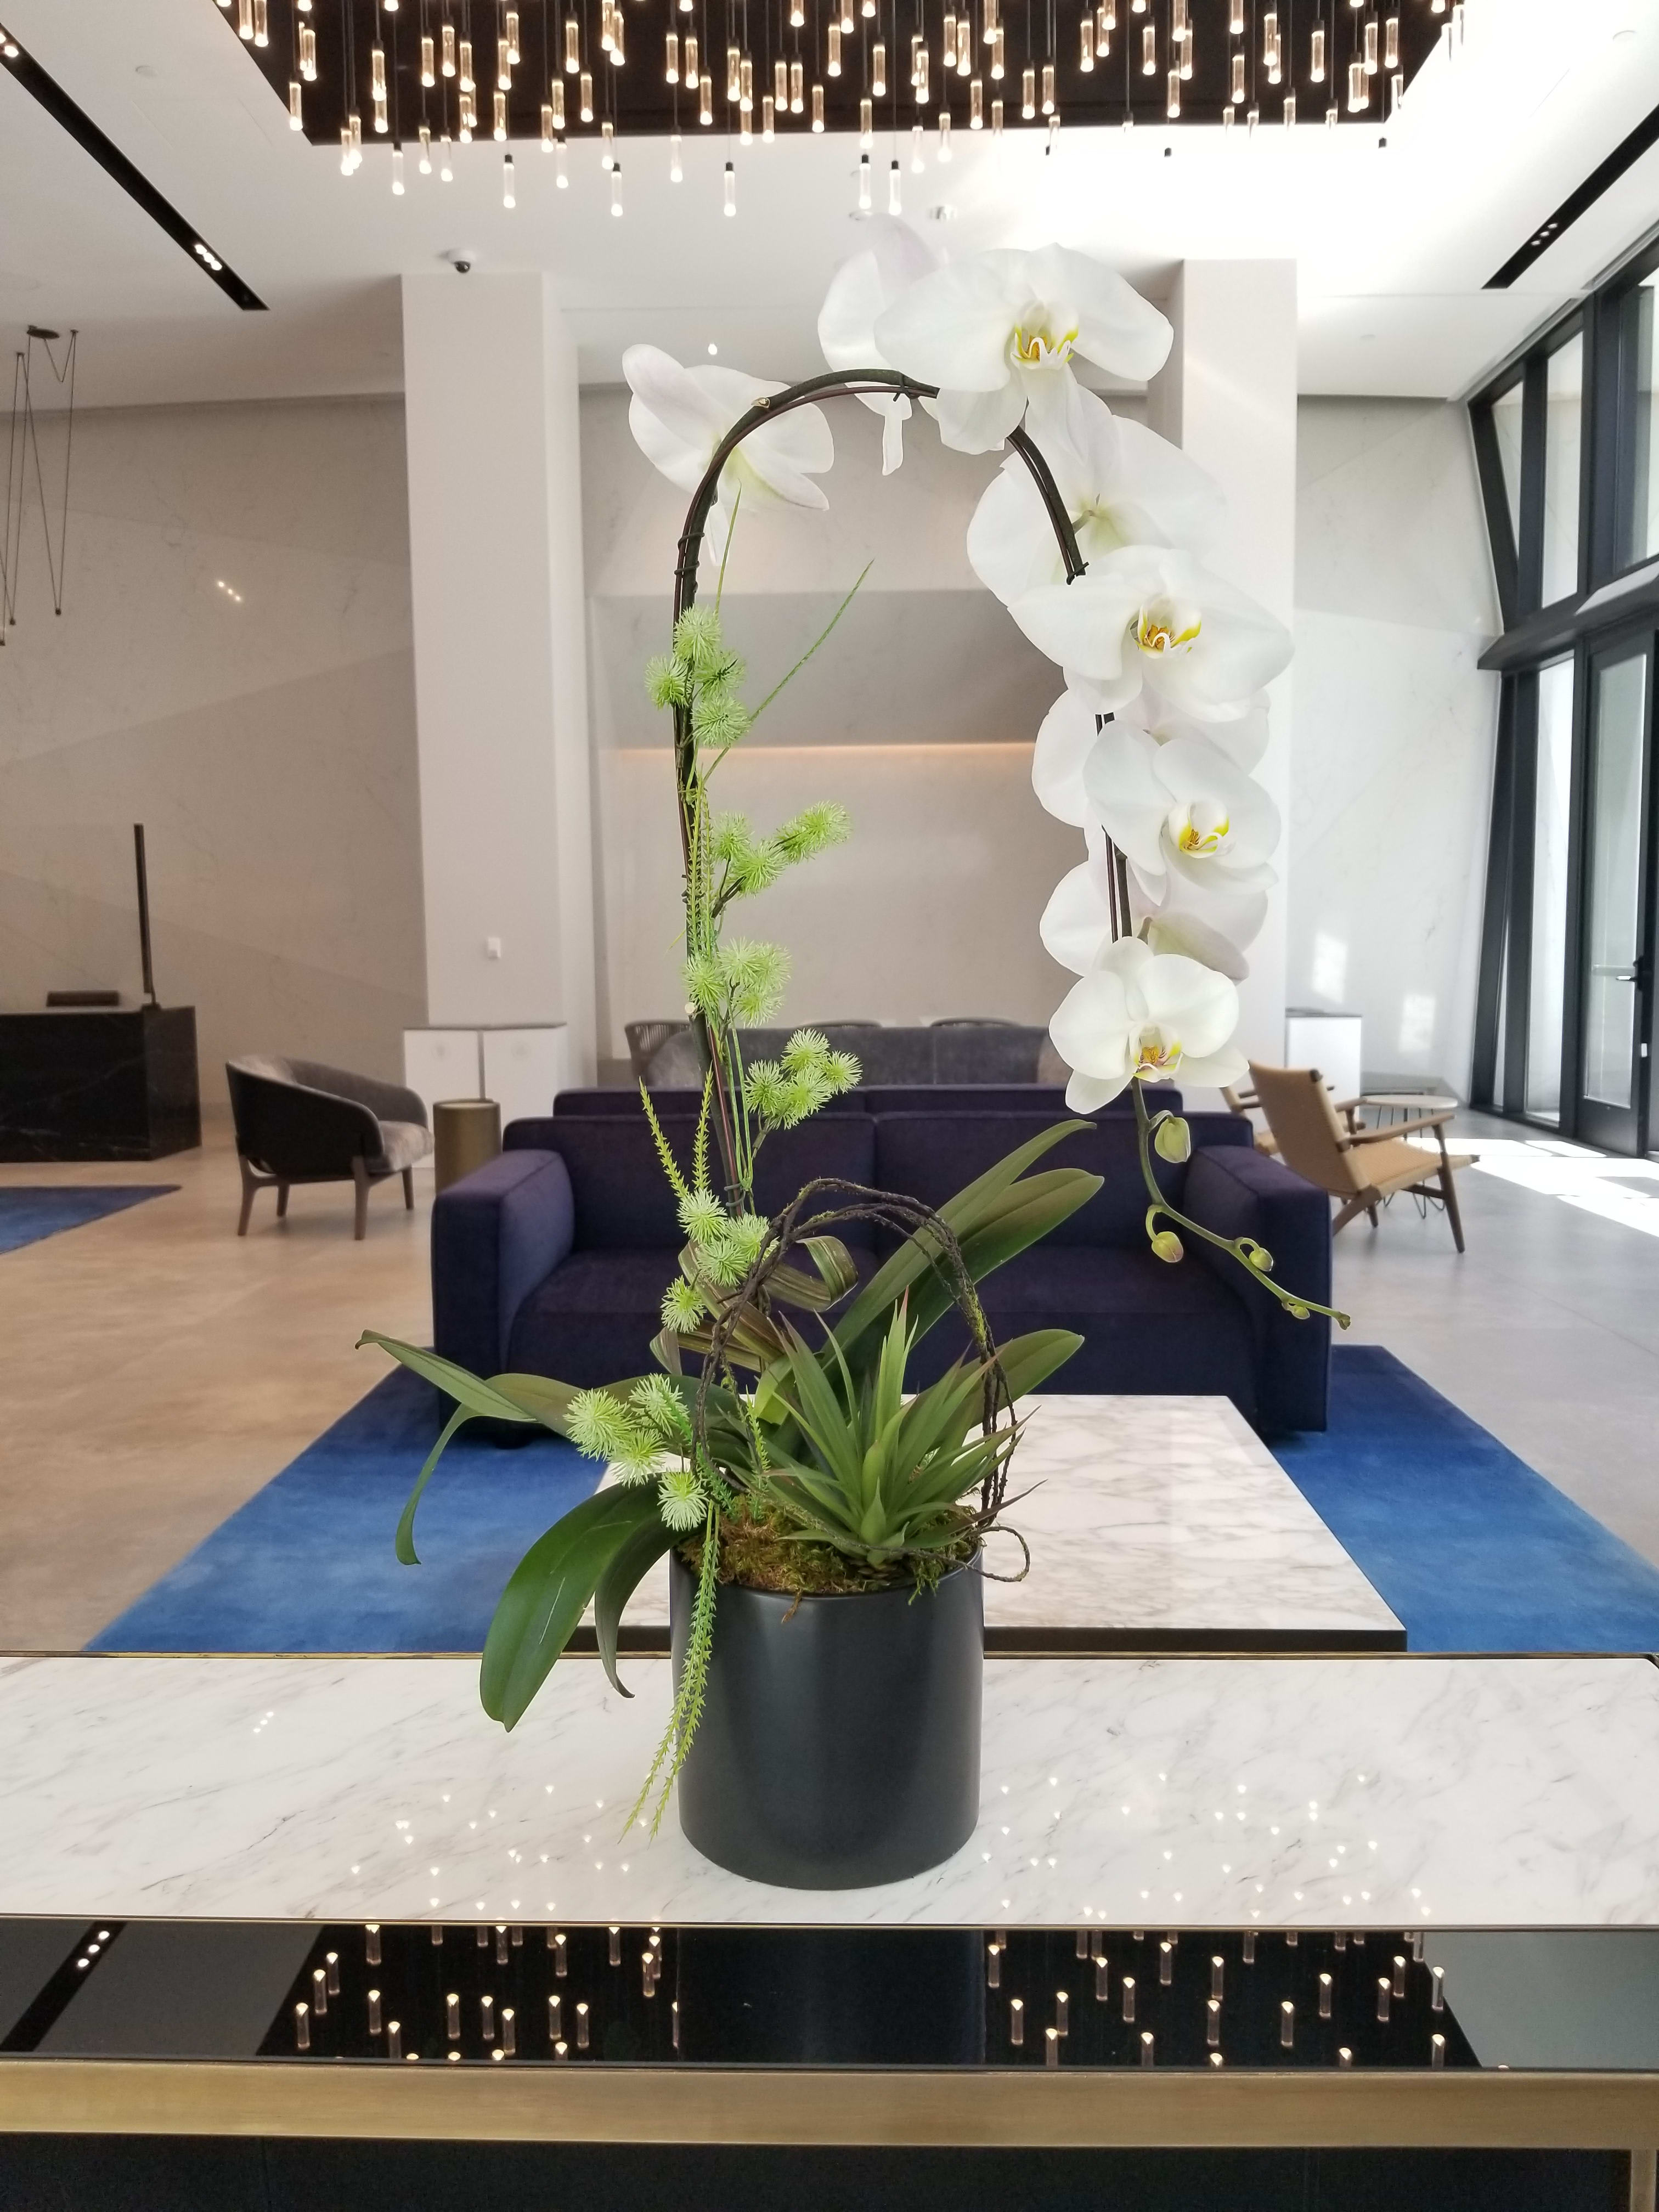 Grand Orchid - A stunning orchid arrangement.